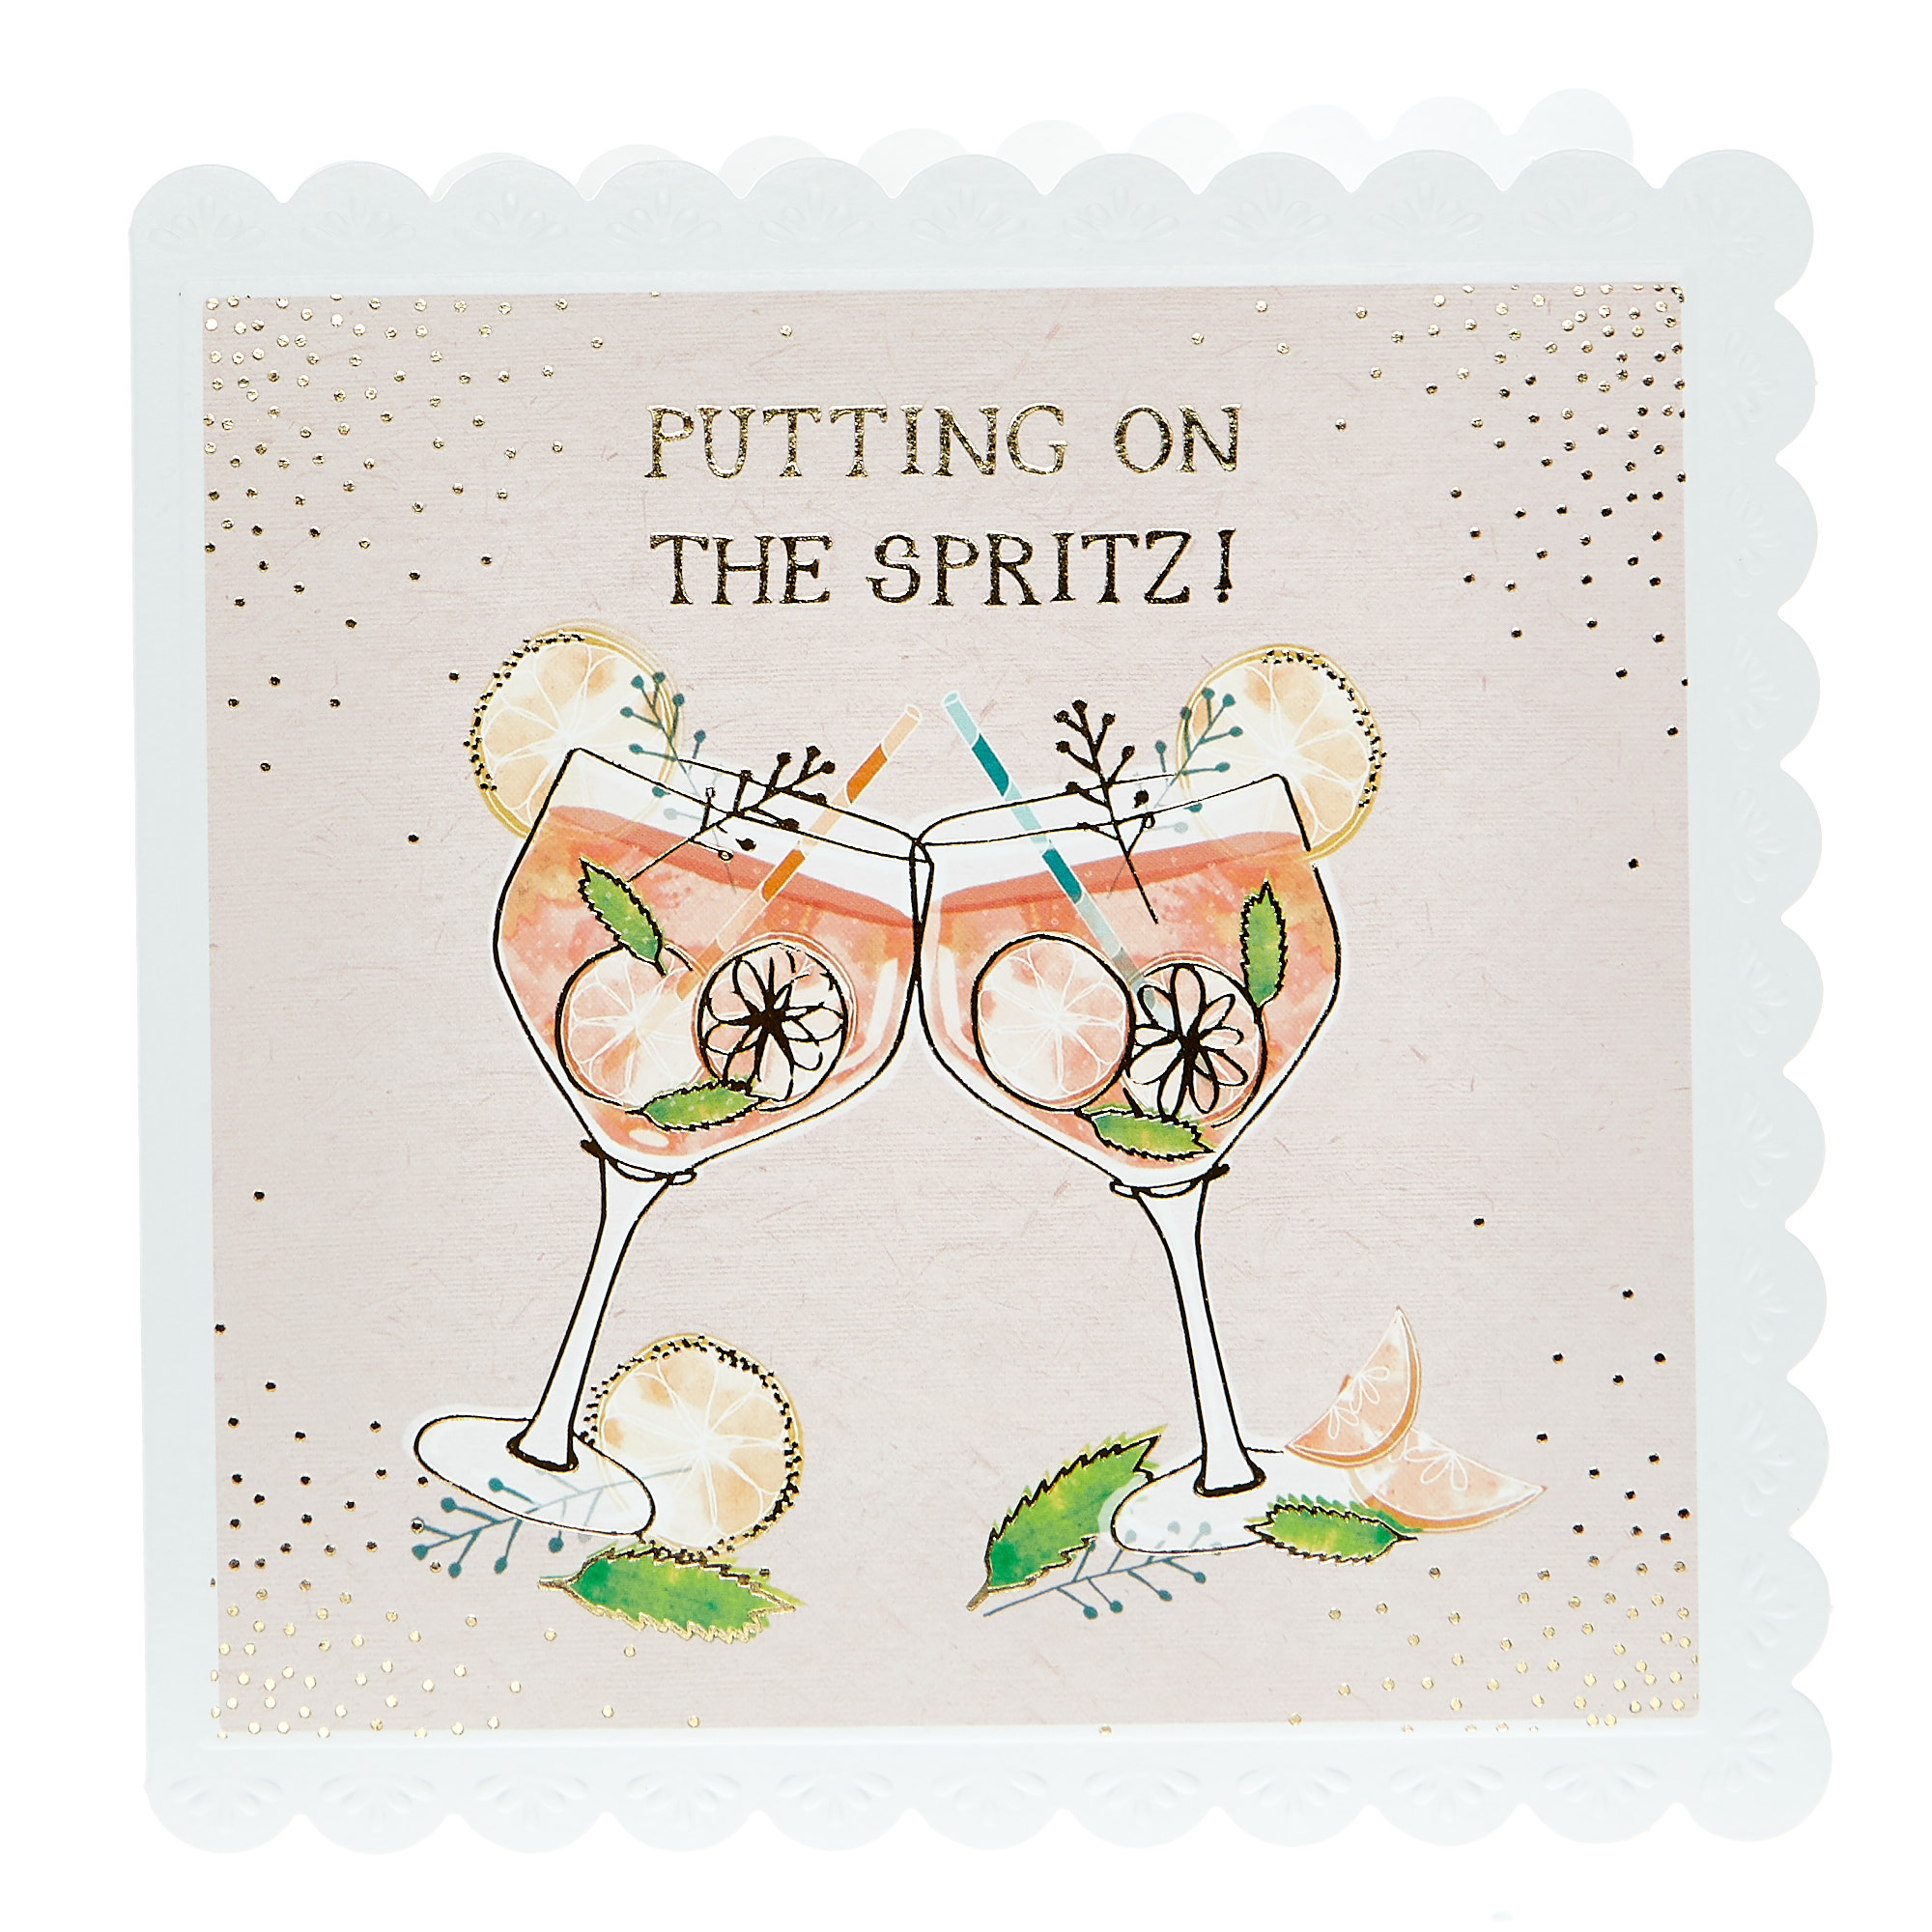 Birthday Card - Putting On The Spritz!